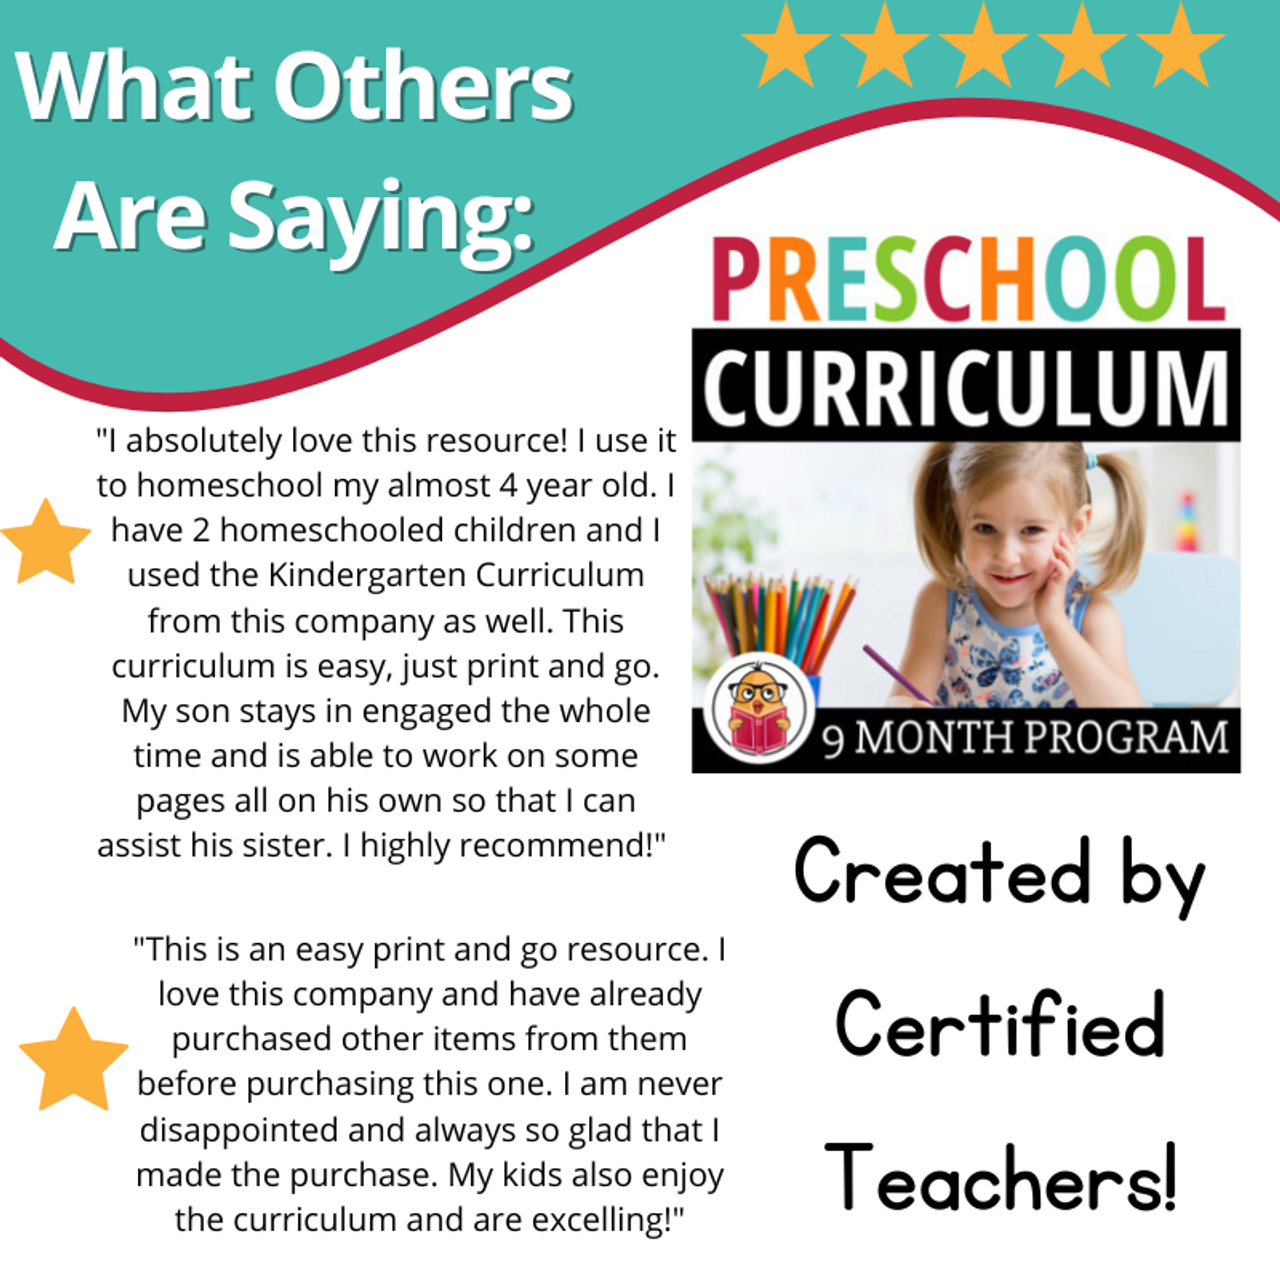 9 Month Preschool Curriculum - DIGTIAL COPY